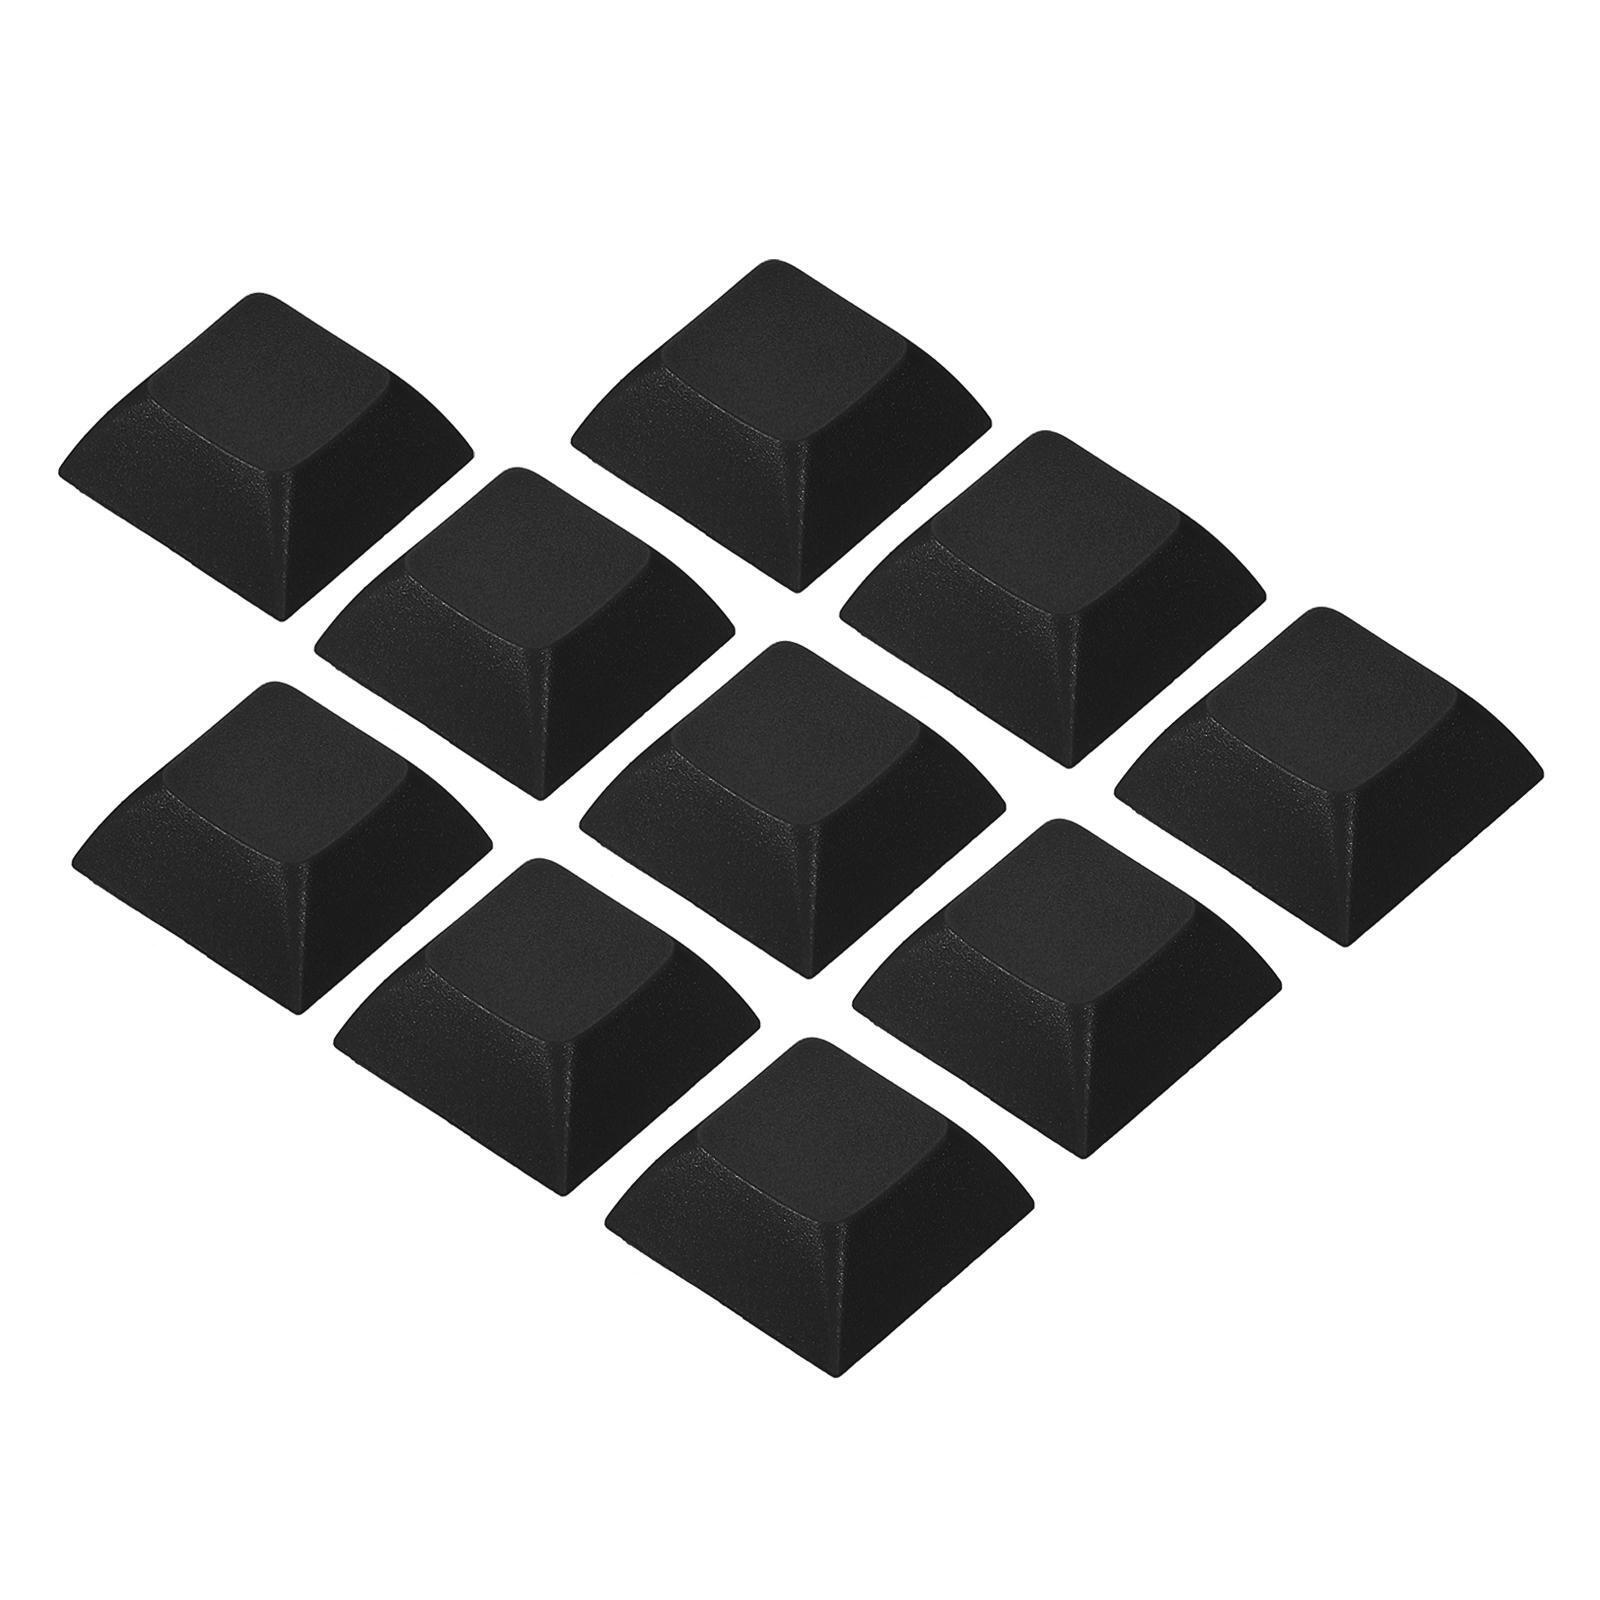 1U Blank Keycaps 10 Pack MX Keyboard Replacement Universal PBT Mechanical, Black